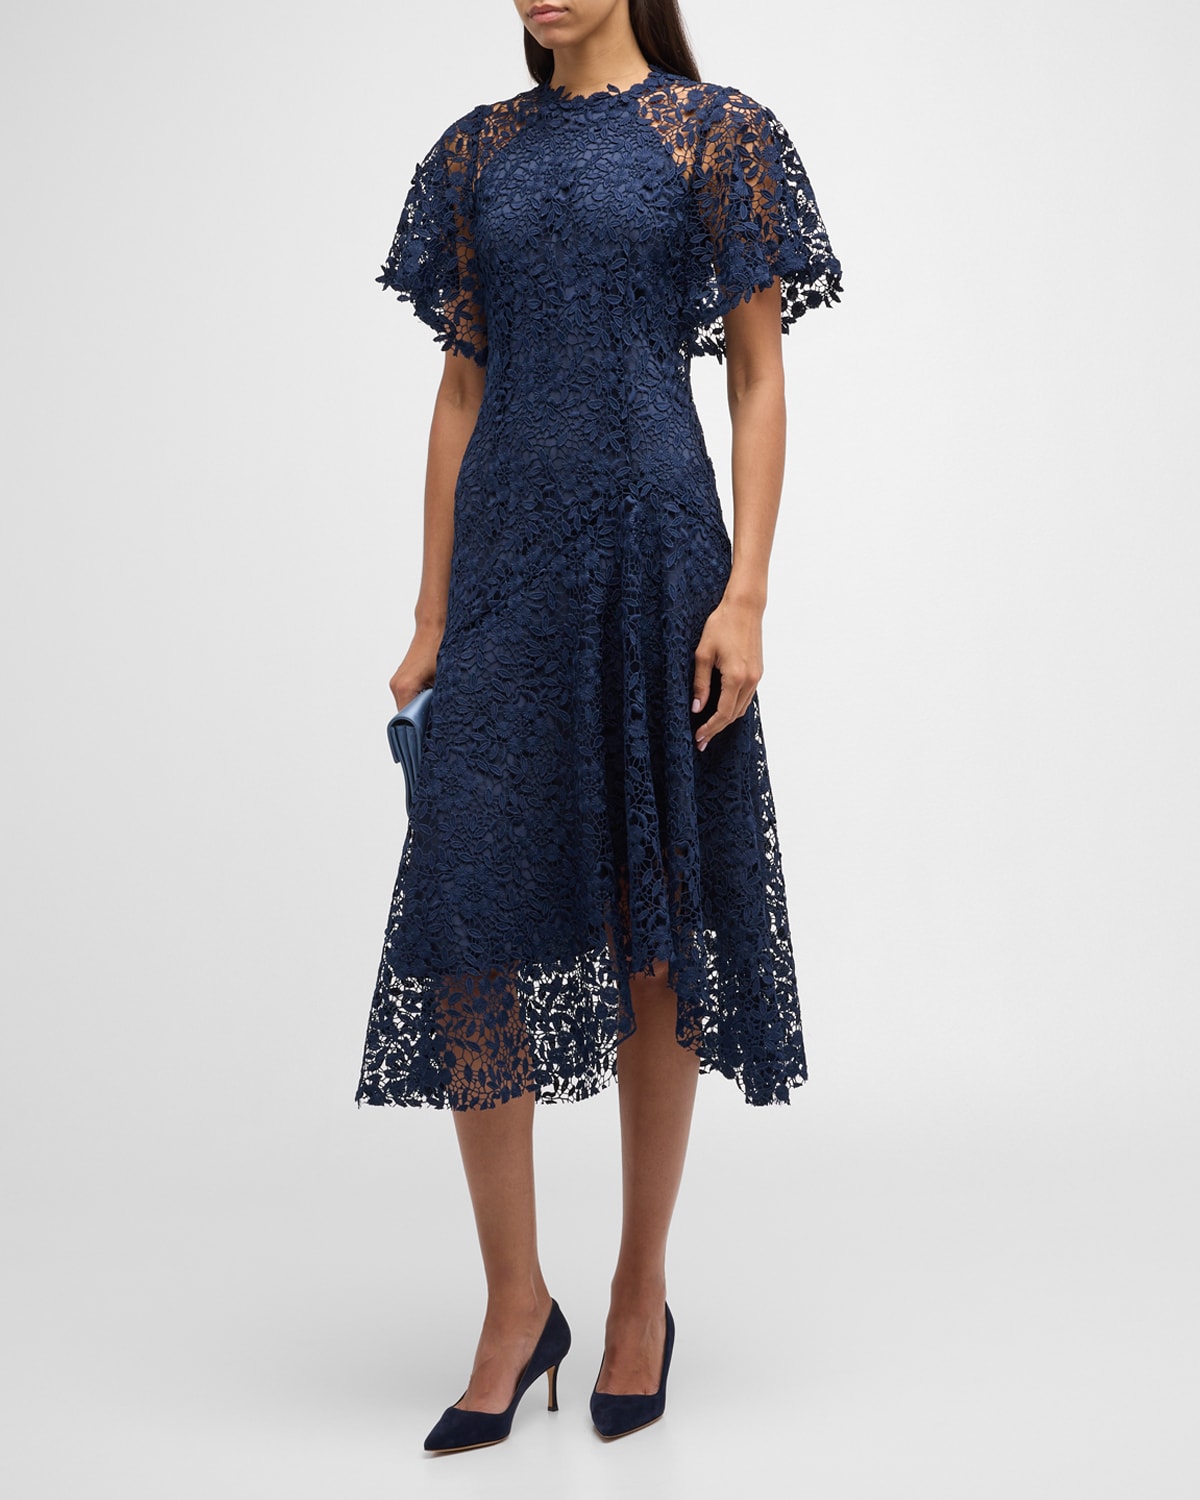 Rickie Freeman For Teri Jon Asymmetric A-line Floral Lace Midi Dress In Navy